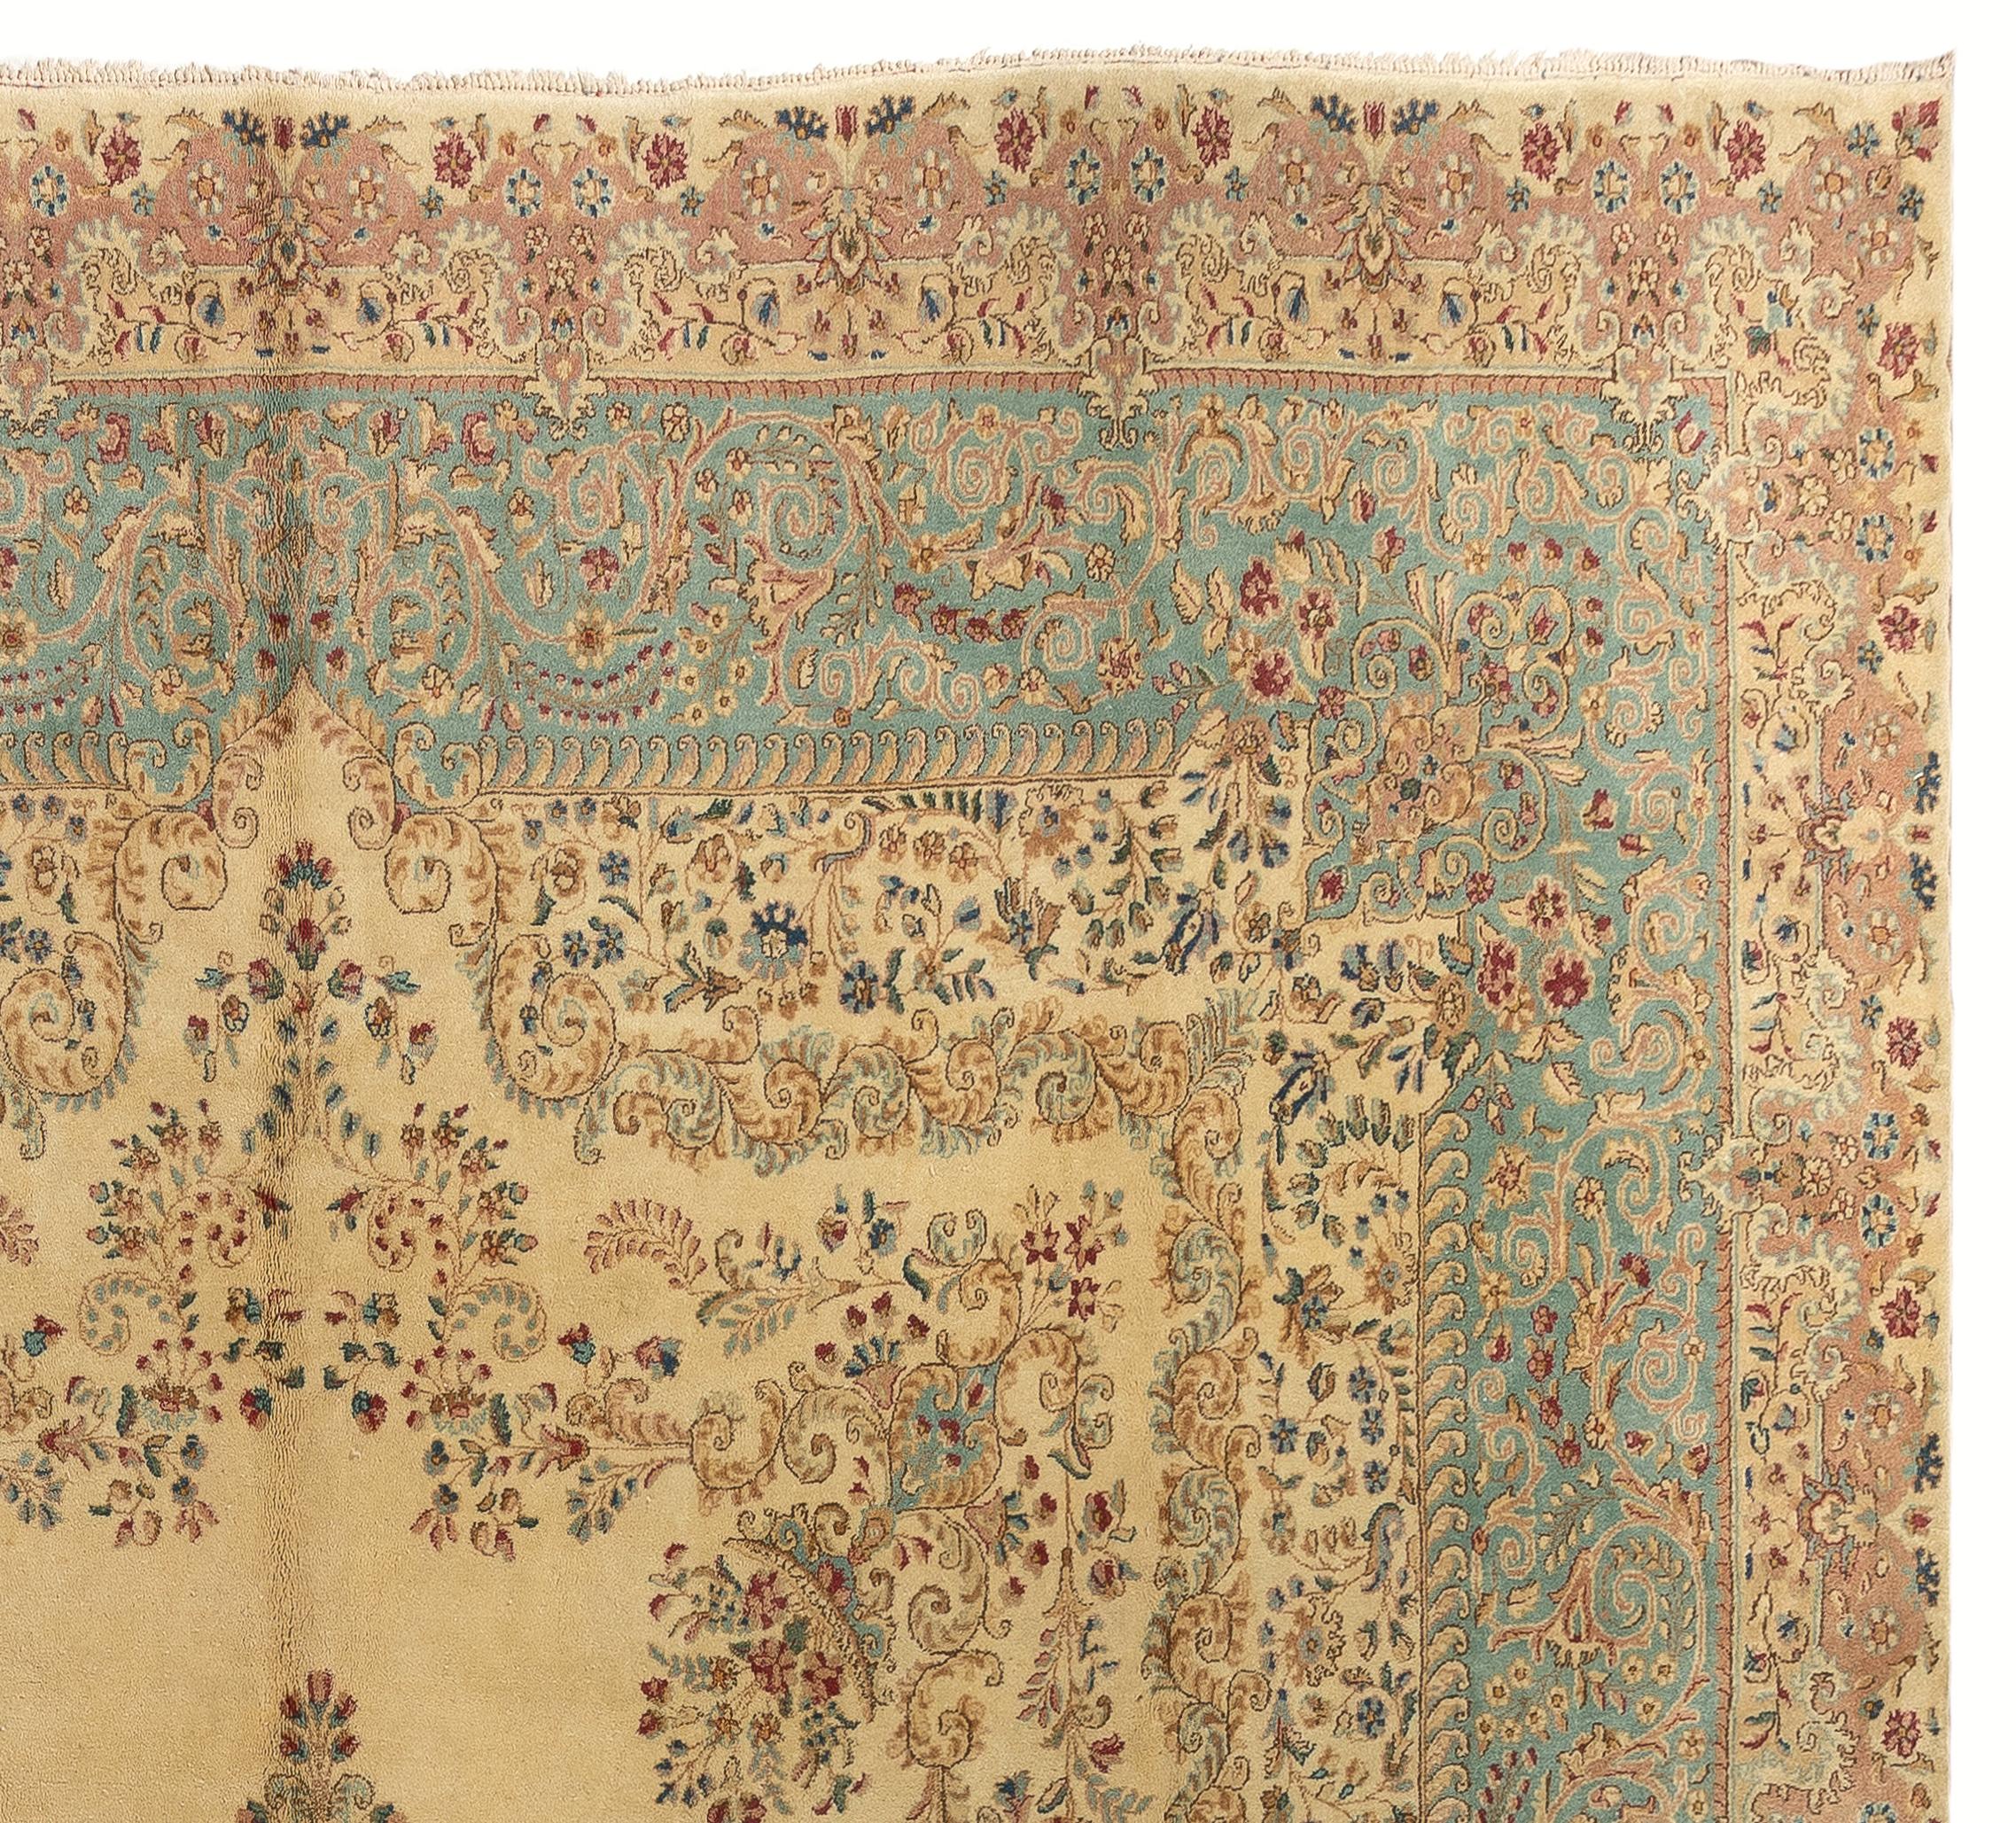 Hand-Woven Vintage Persian Kerman Rug, Soft Merino Wool, Beautiful Colors, 11.2 x 13.6 Ft 